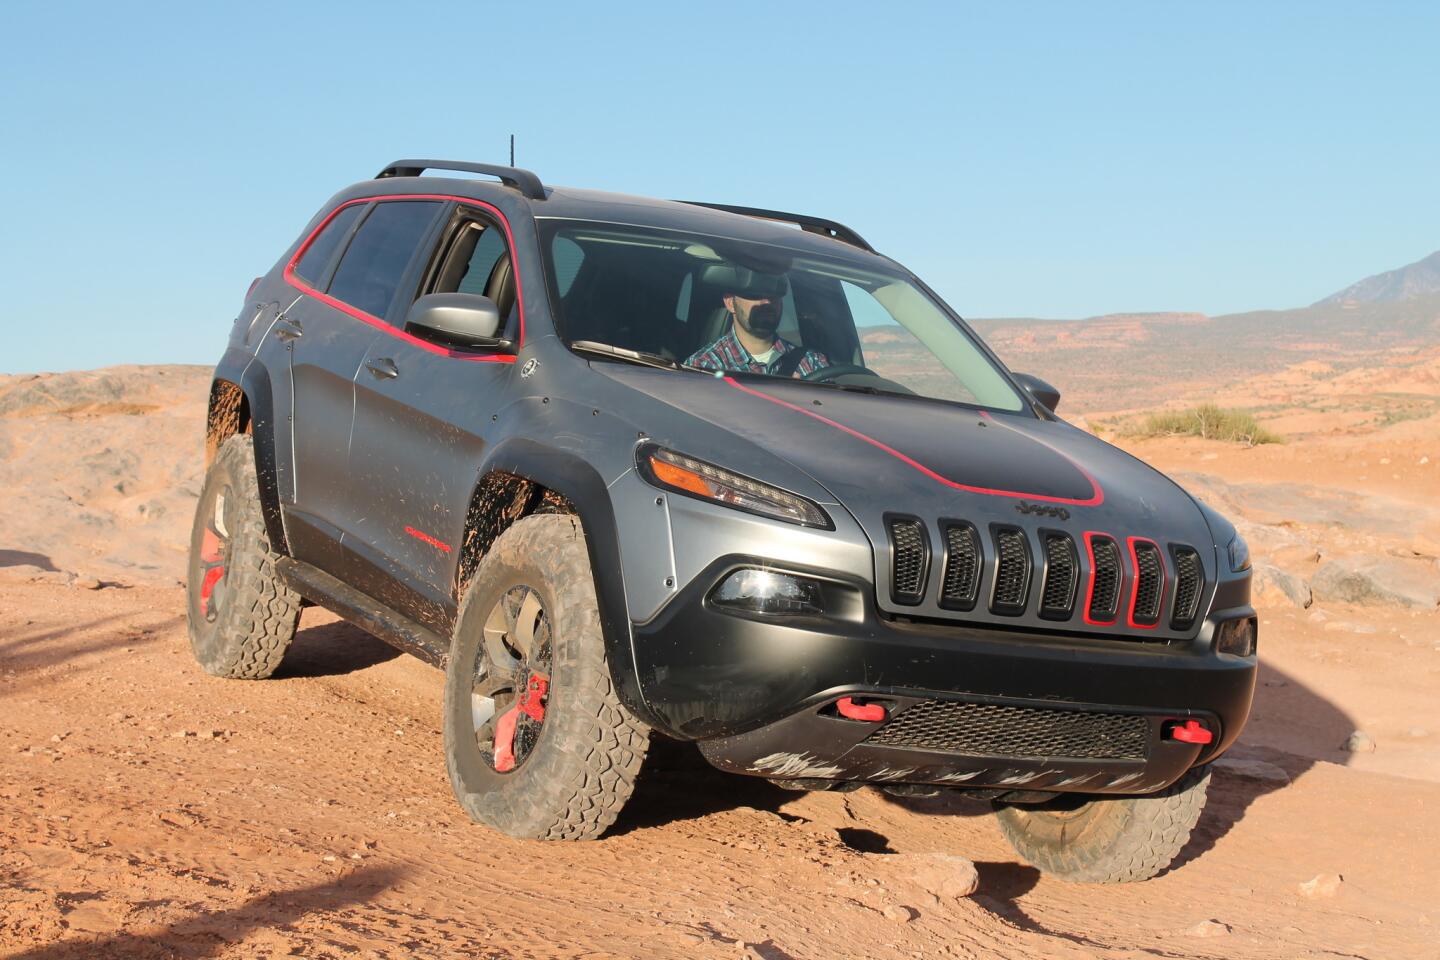 Jeep Cherokee Dakar concept